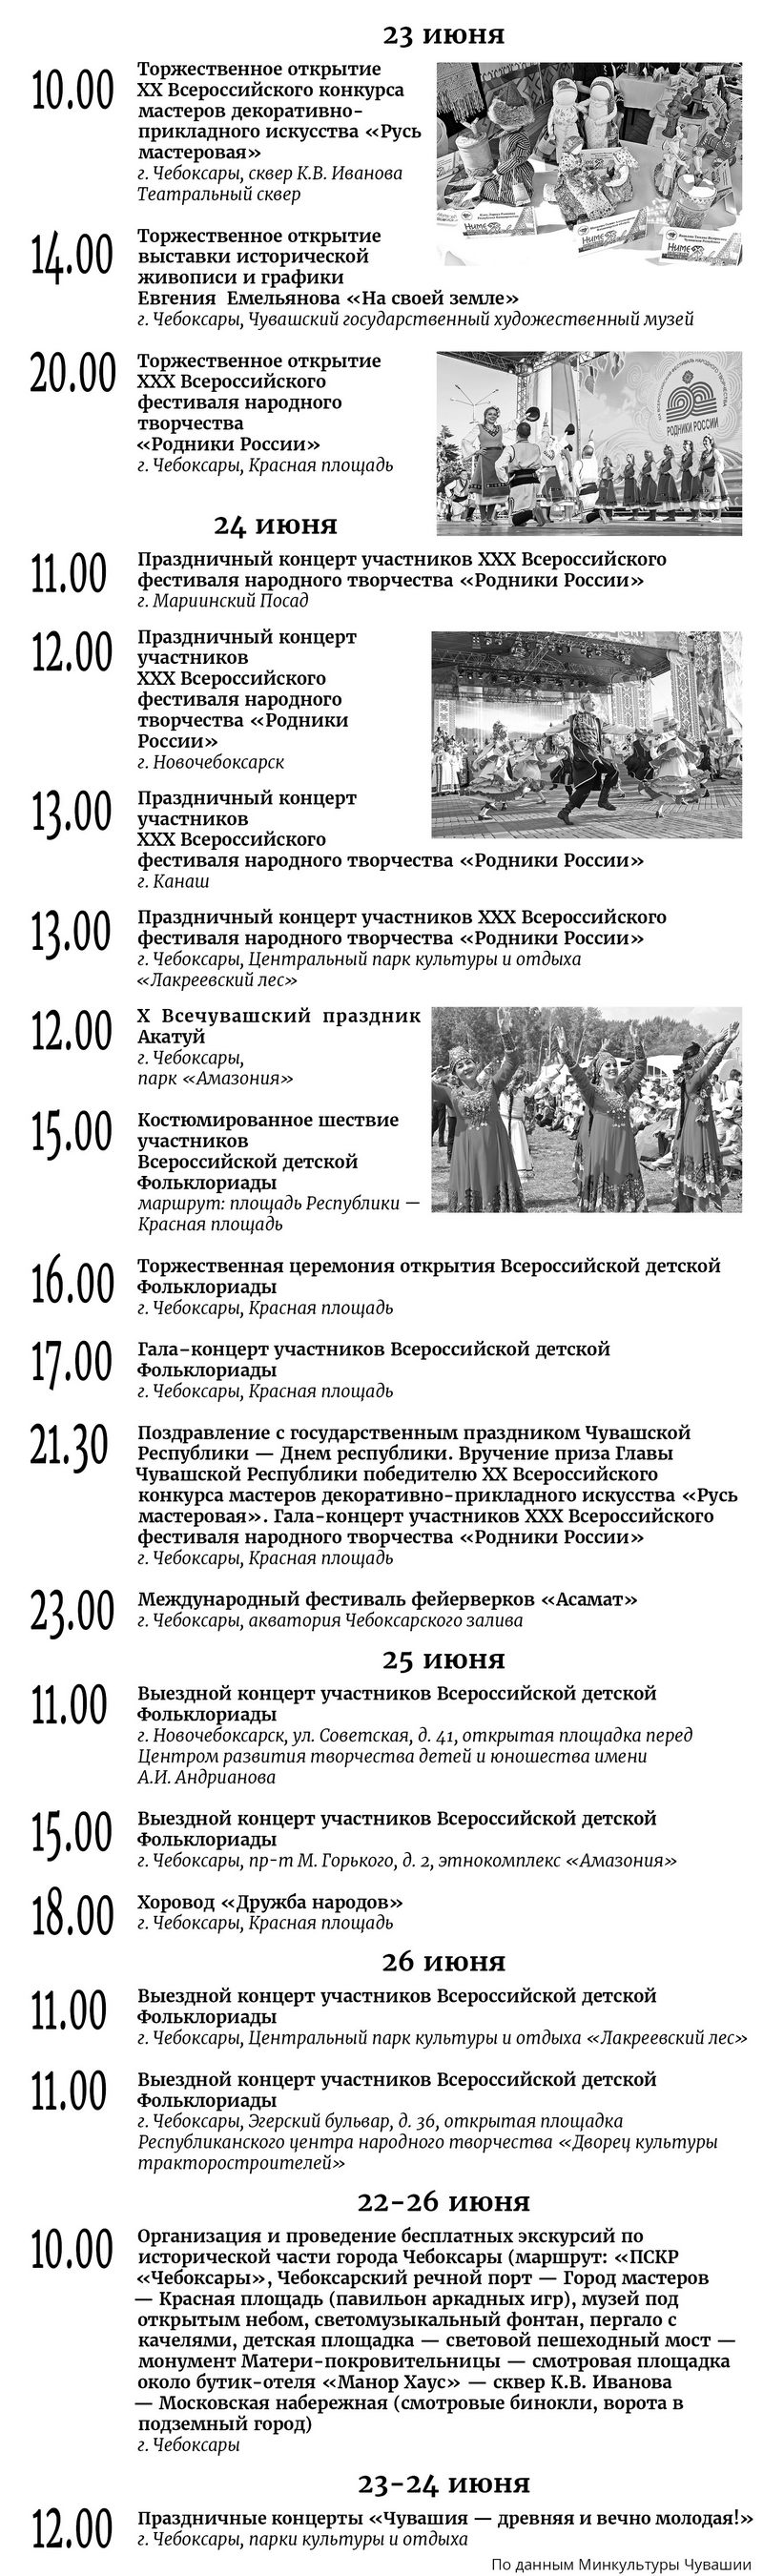 Программа празднования Дня республики-2022